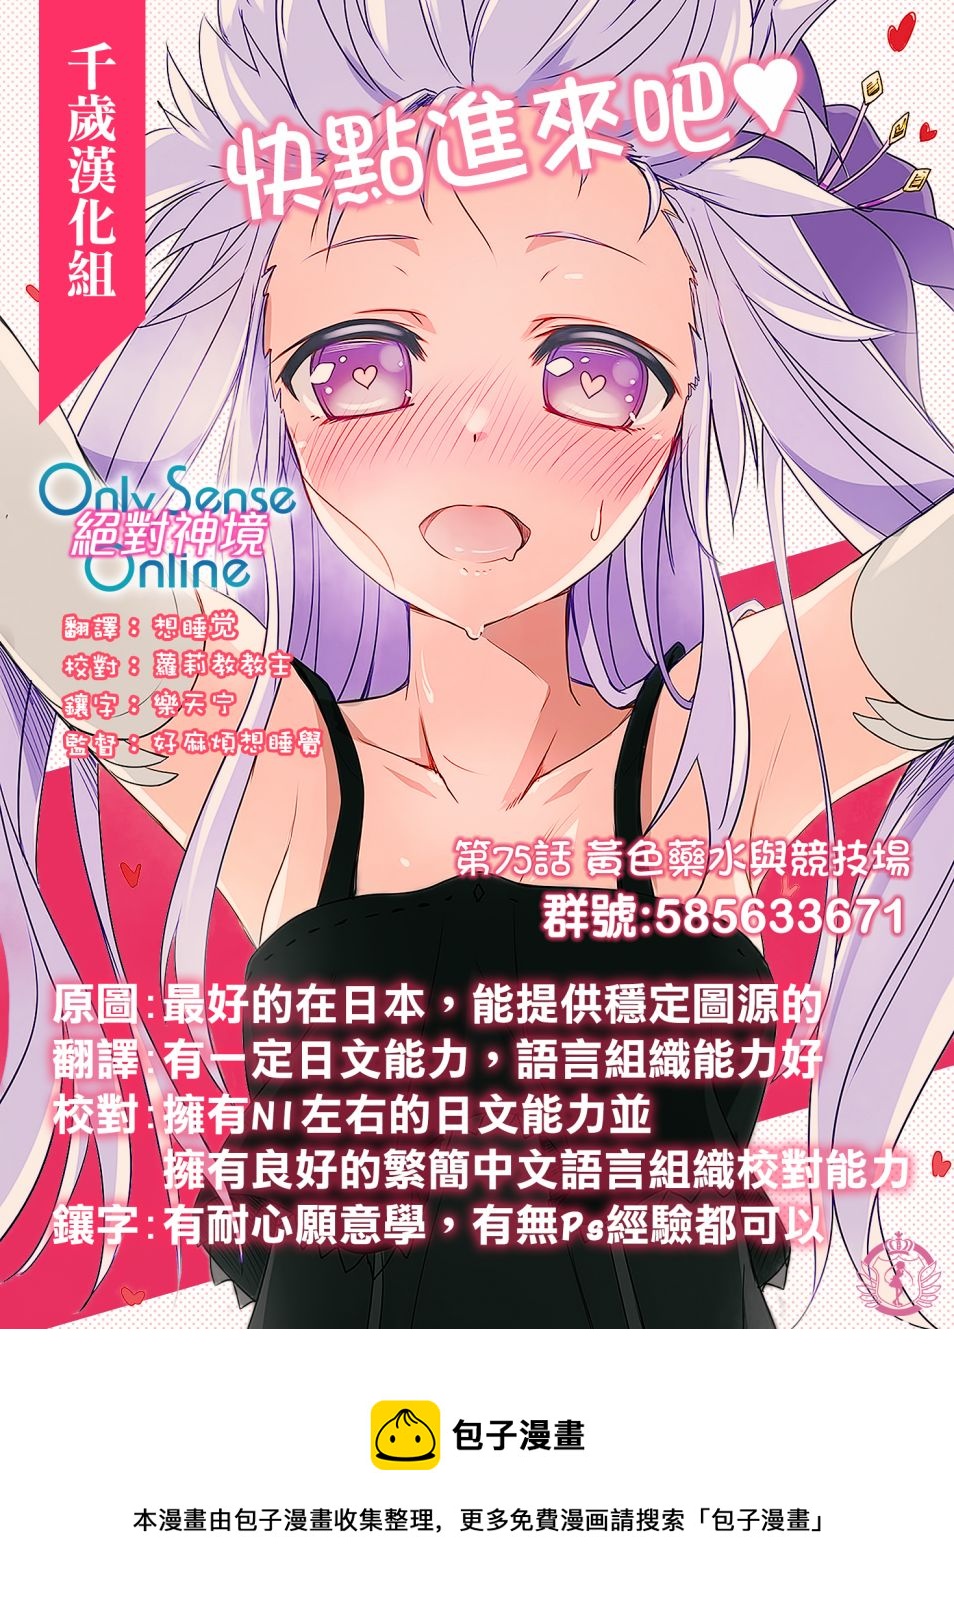 Only Sense Online - 第75話 - 3